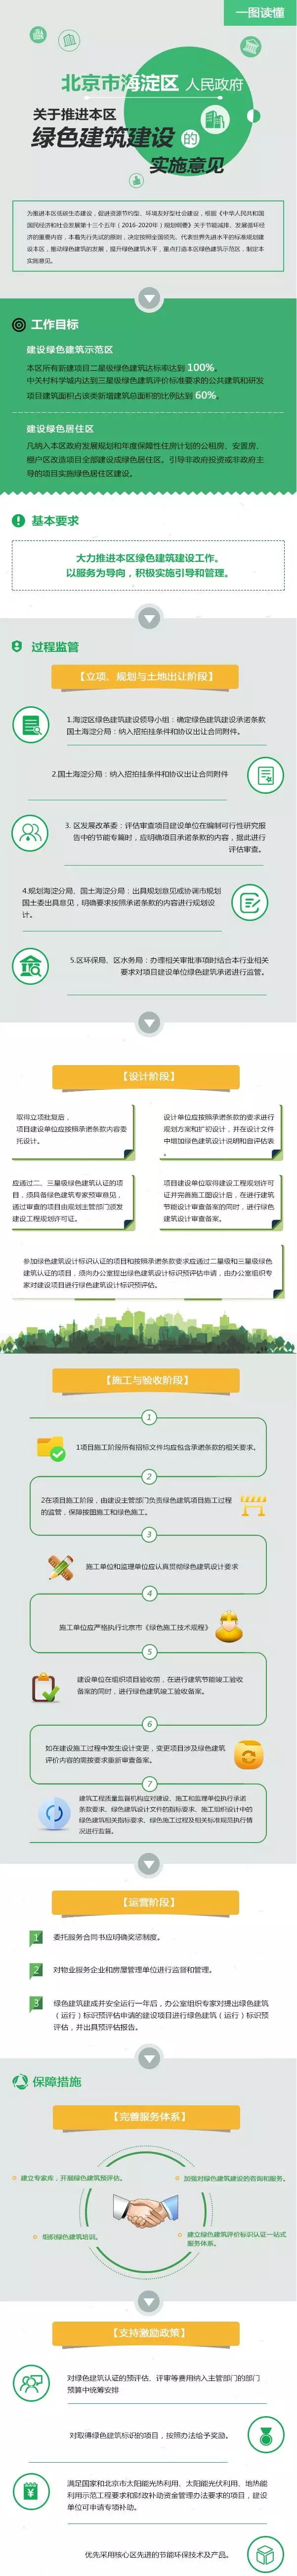 【BIM头条】北京：海淀区所有新建项目必须绿建二星起！ BIM视界 第1张